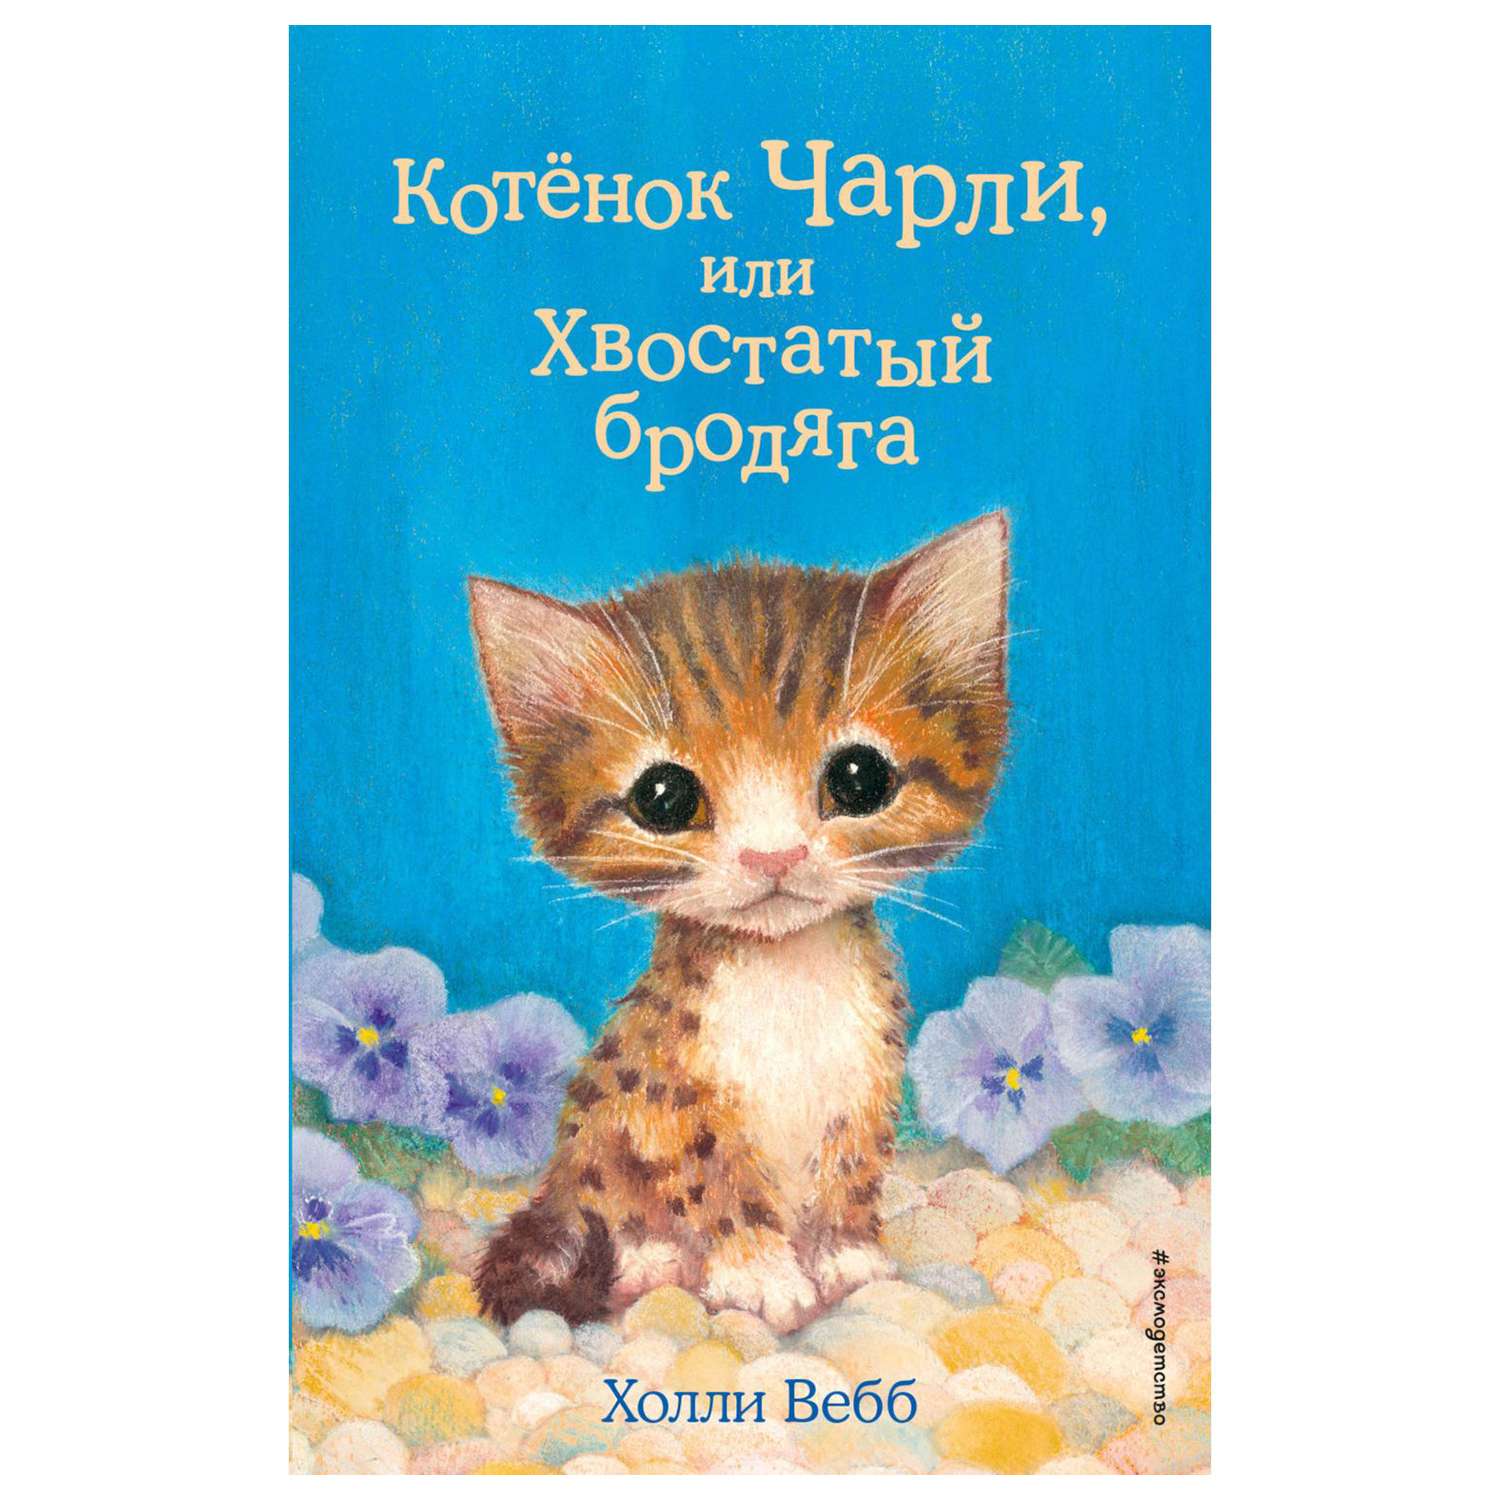 Книга Эксмо Котёнок Чарли или Хвостатый бродяга 43 - фото 1